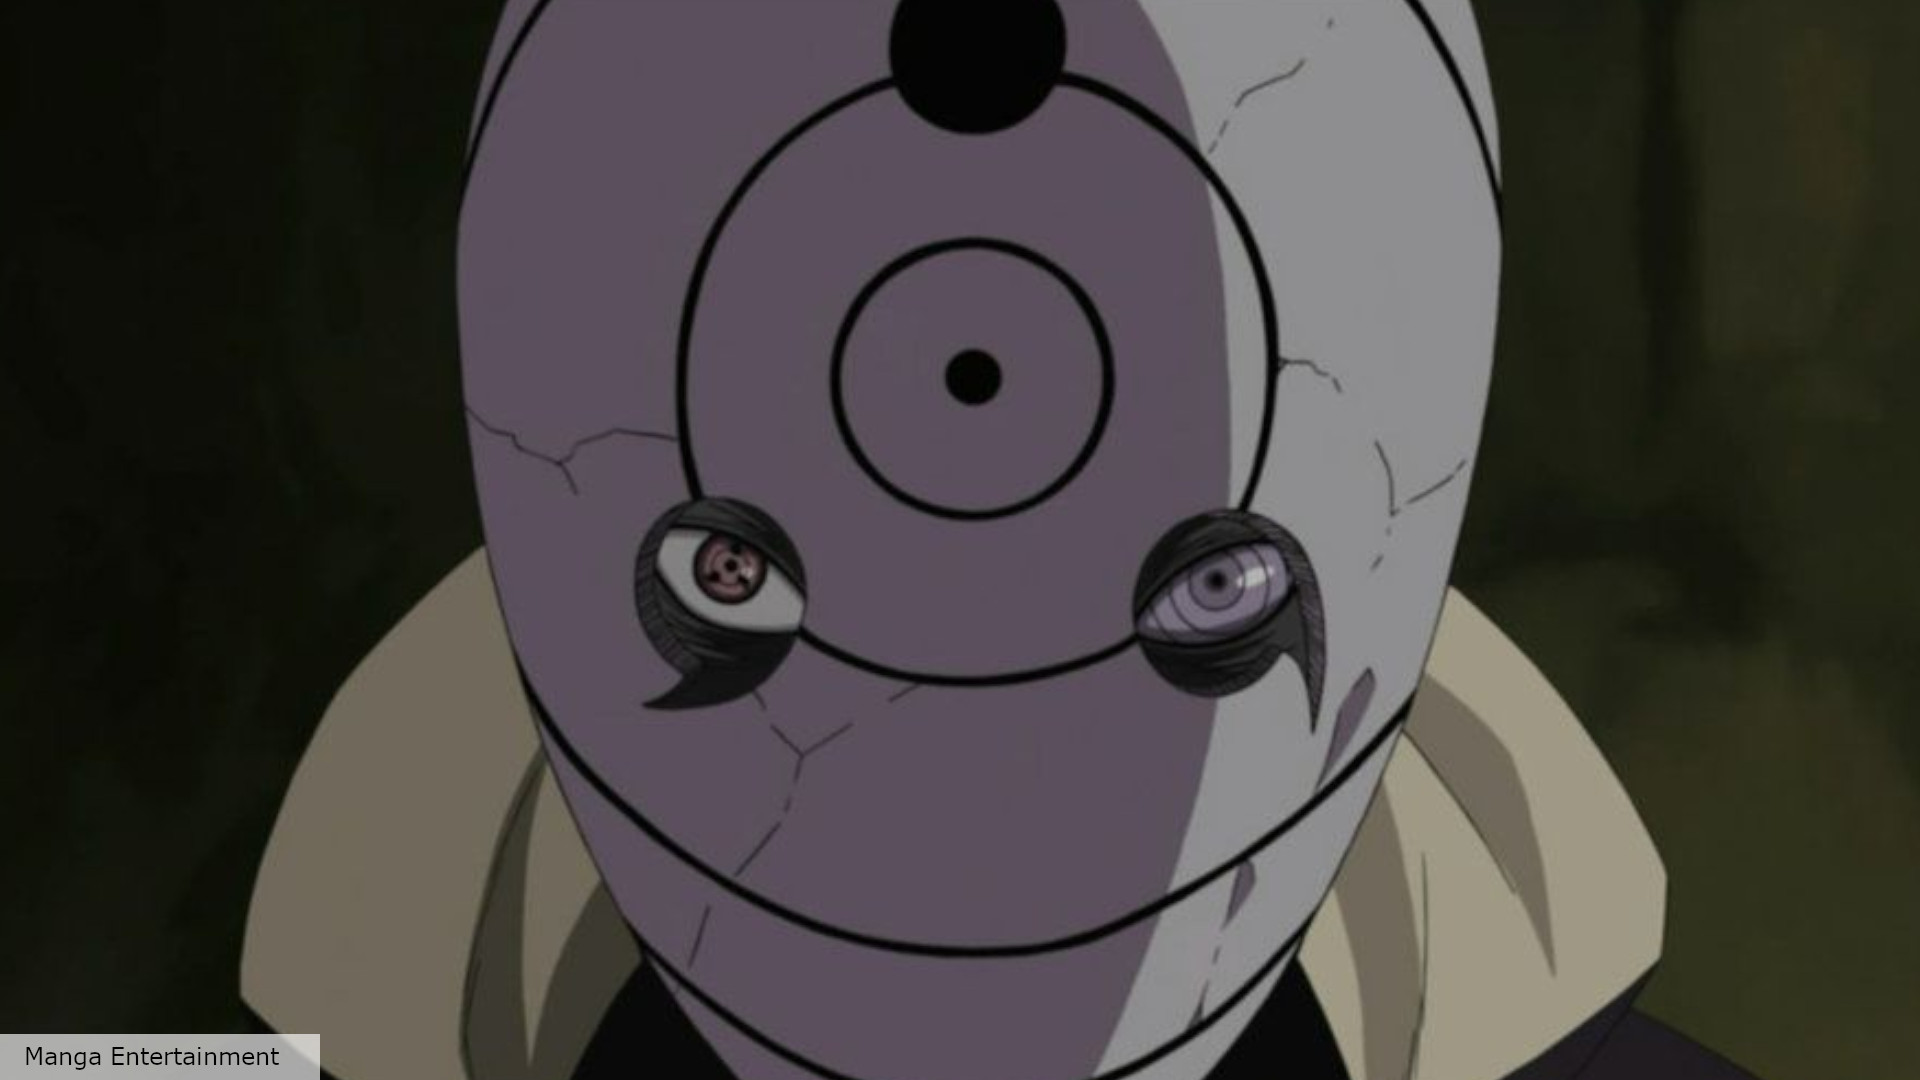 Did Naruto Copy and Paste Obito's Character Design?